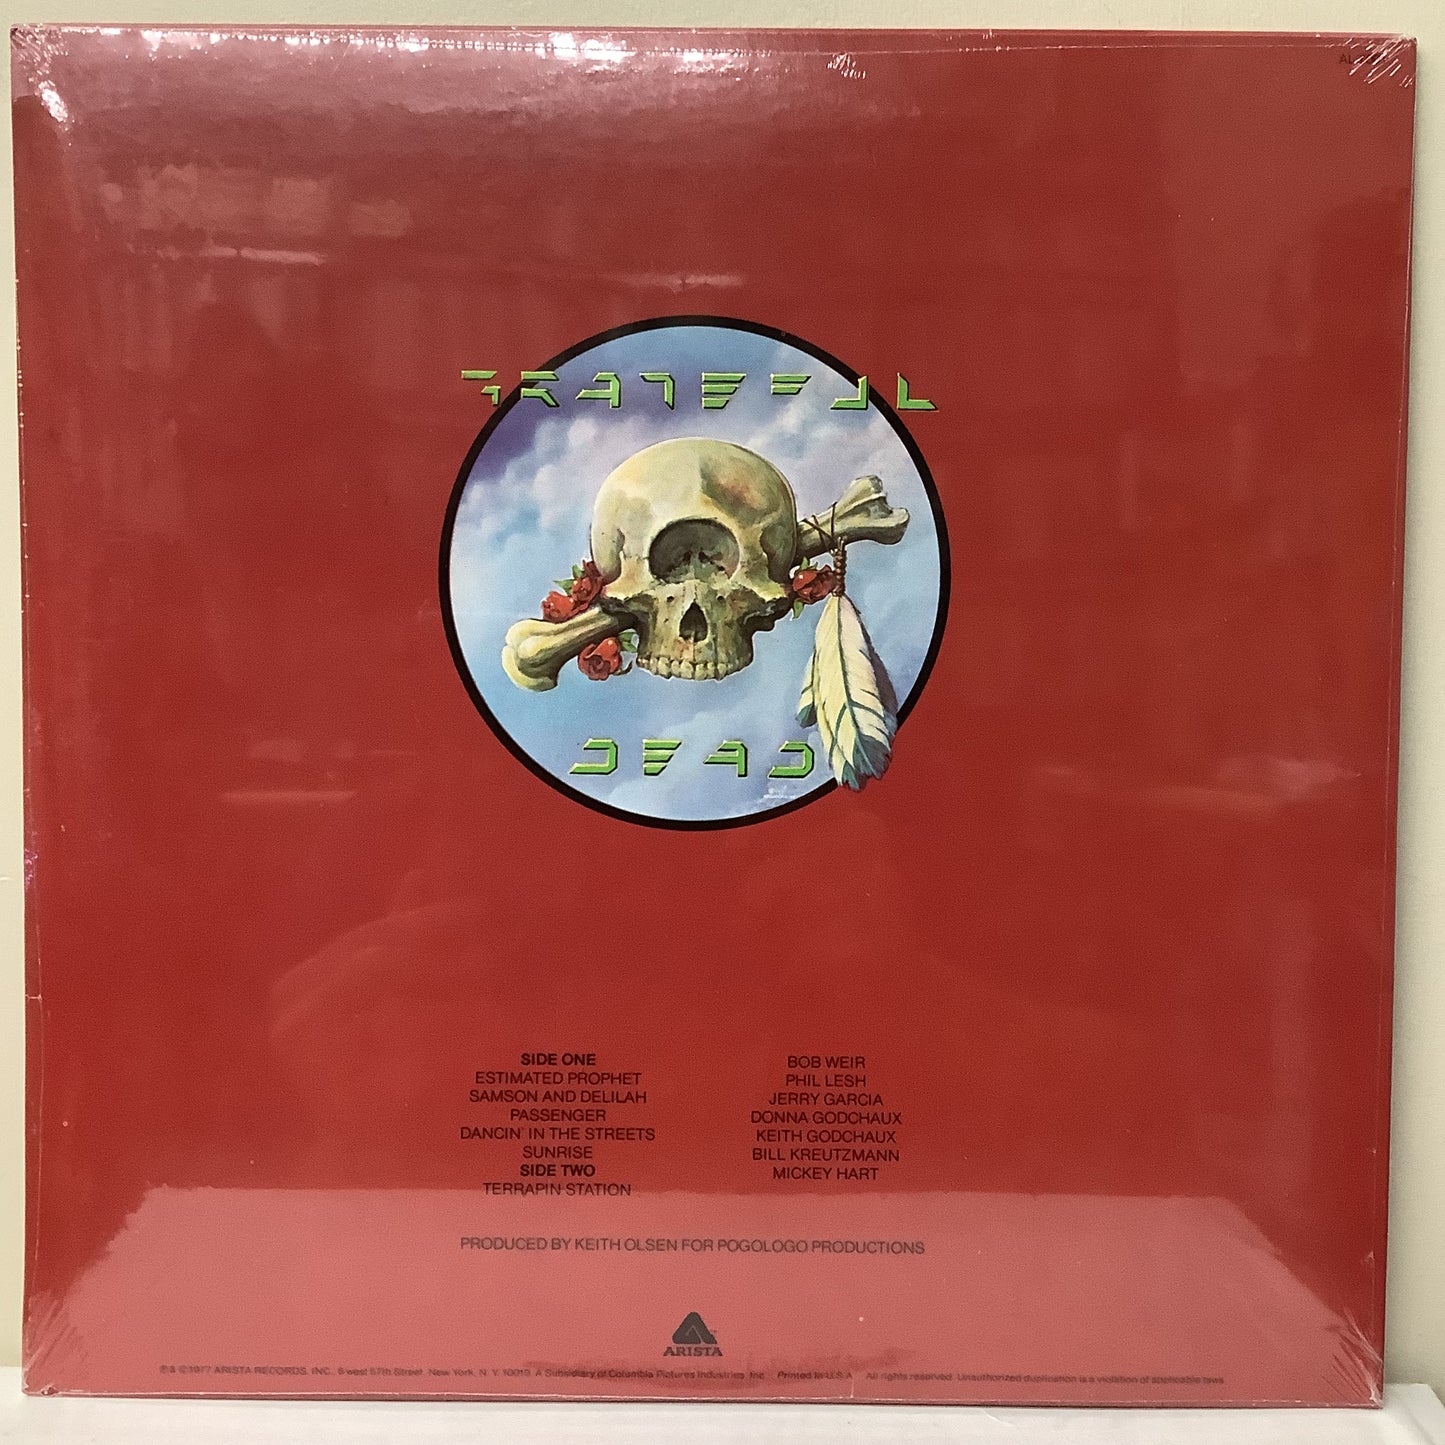 Grateful Dead - Terrapin Station - Arista LP